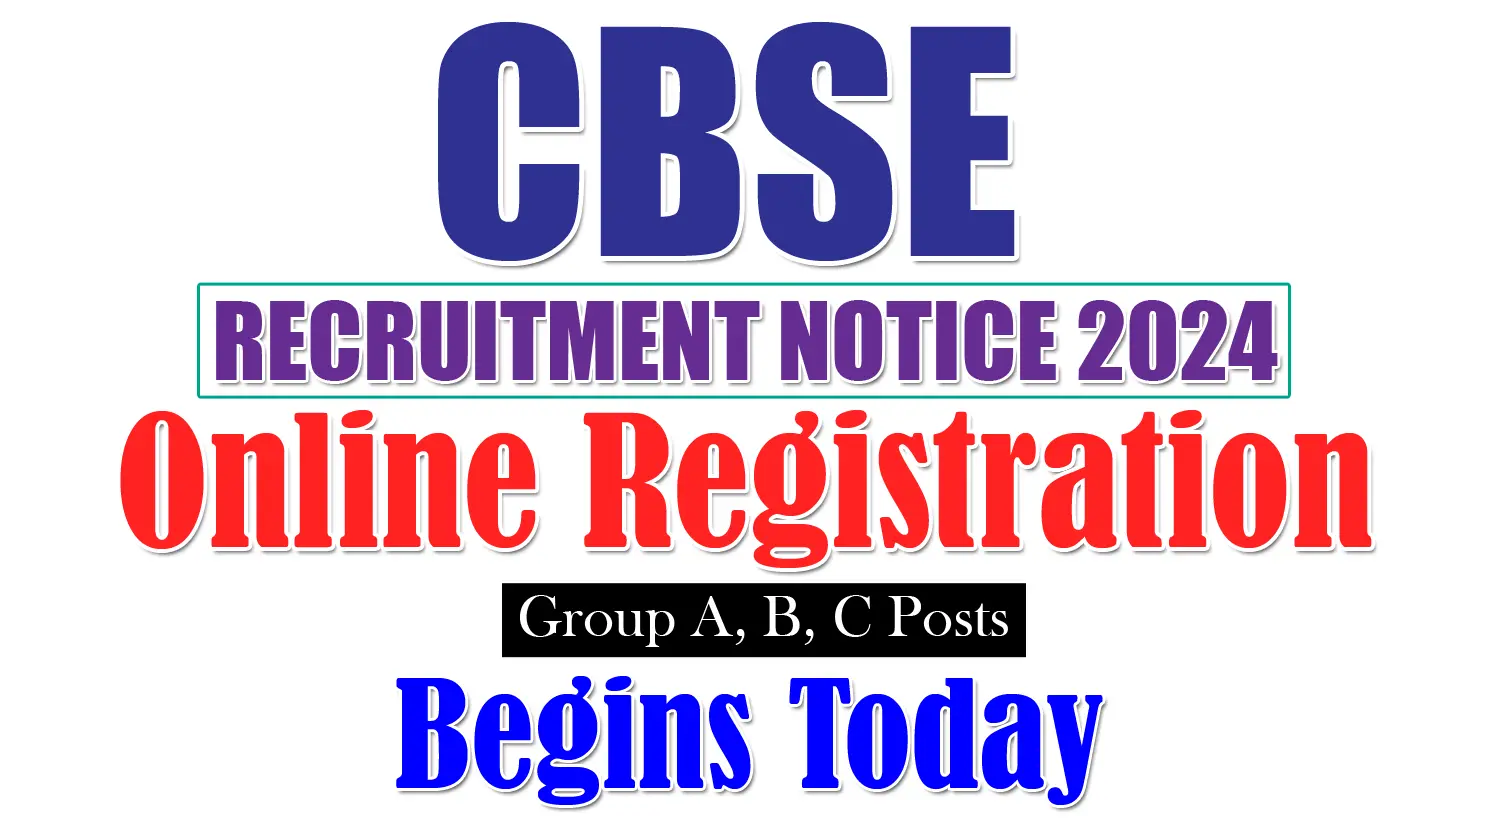 CBSE Recruitment 2024 Online Registration Begins Today